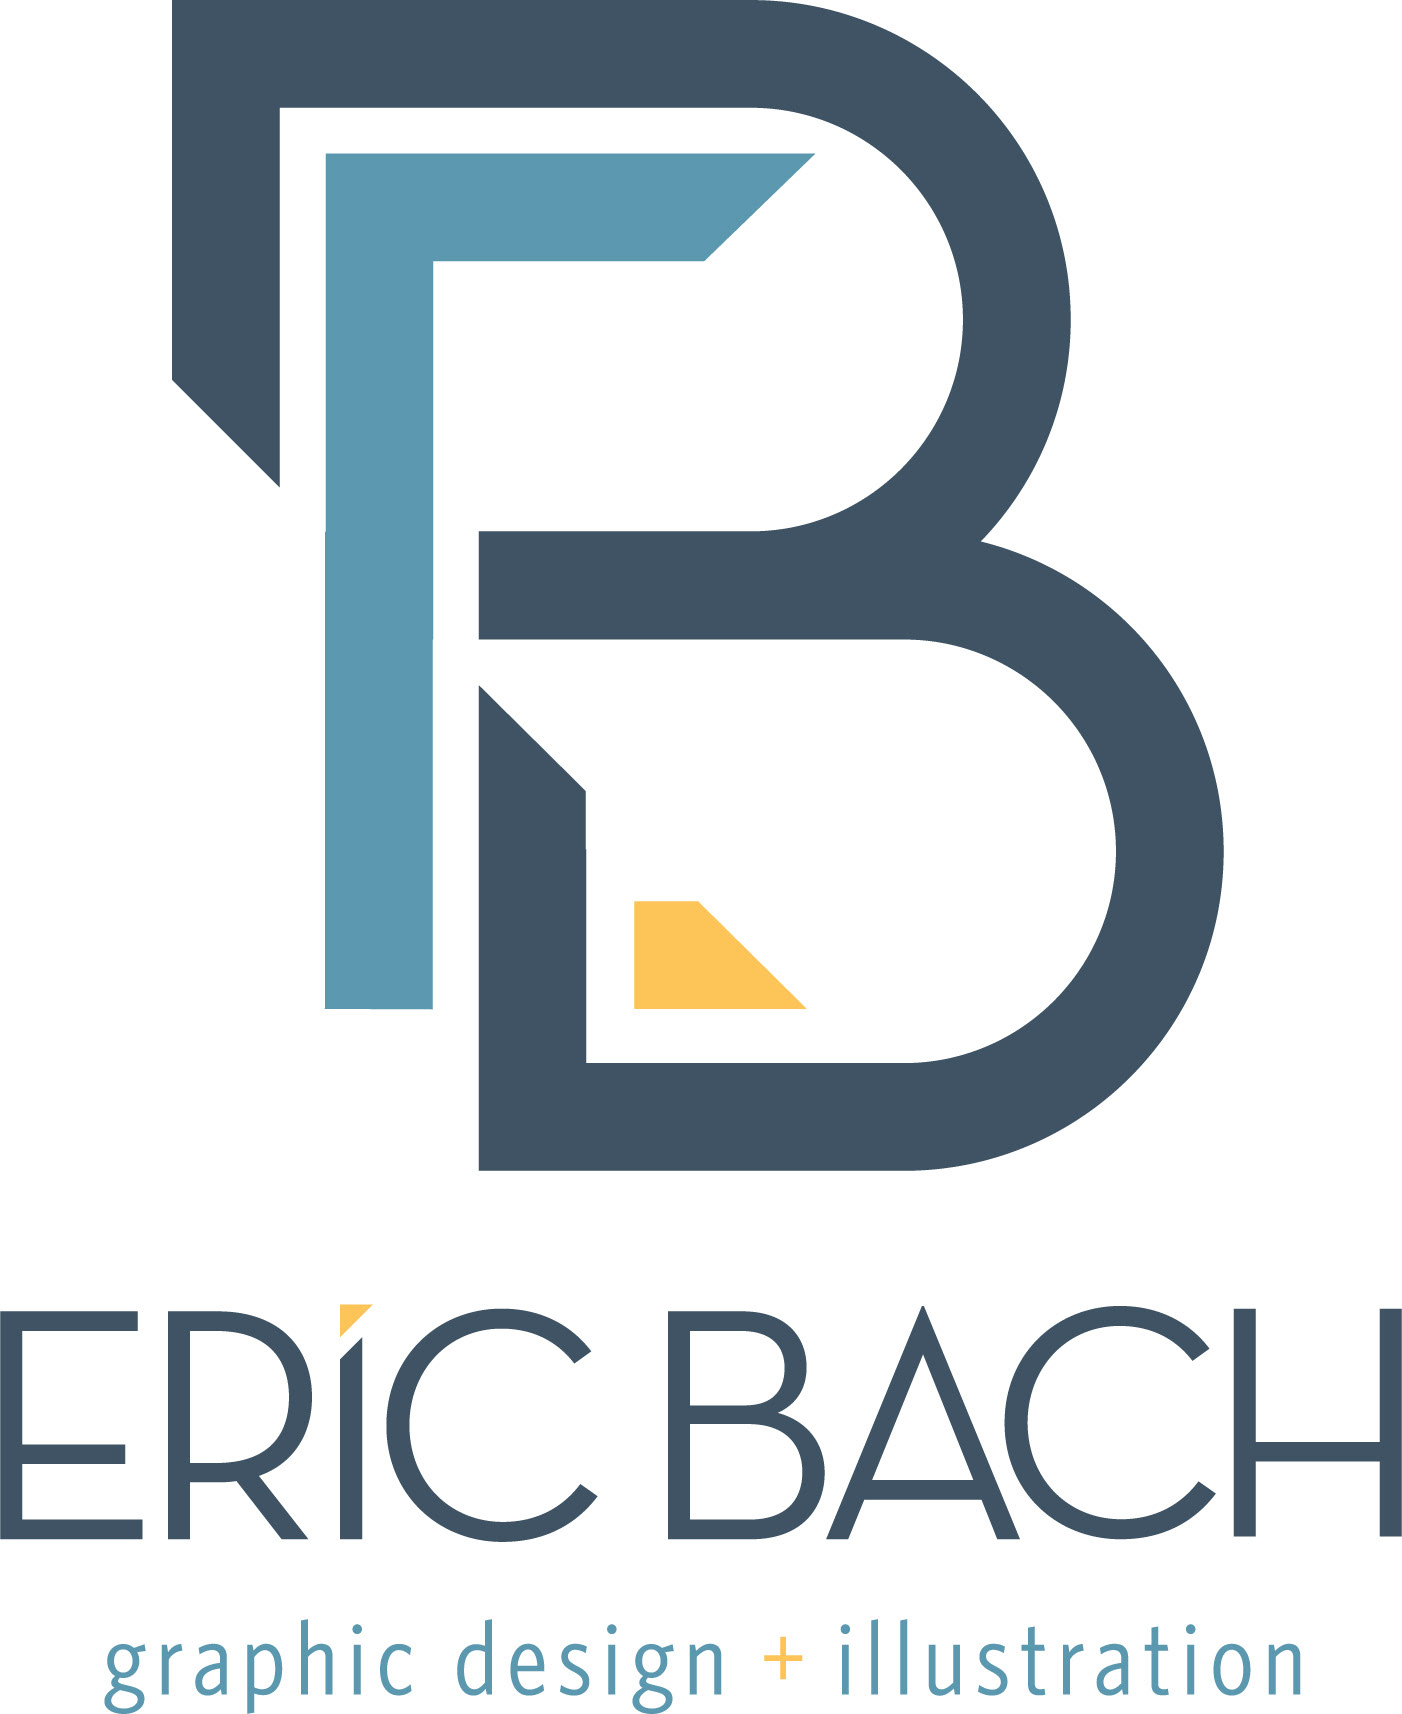 Eric Bach